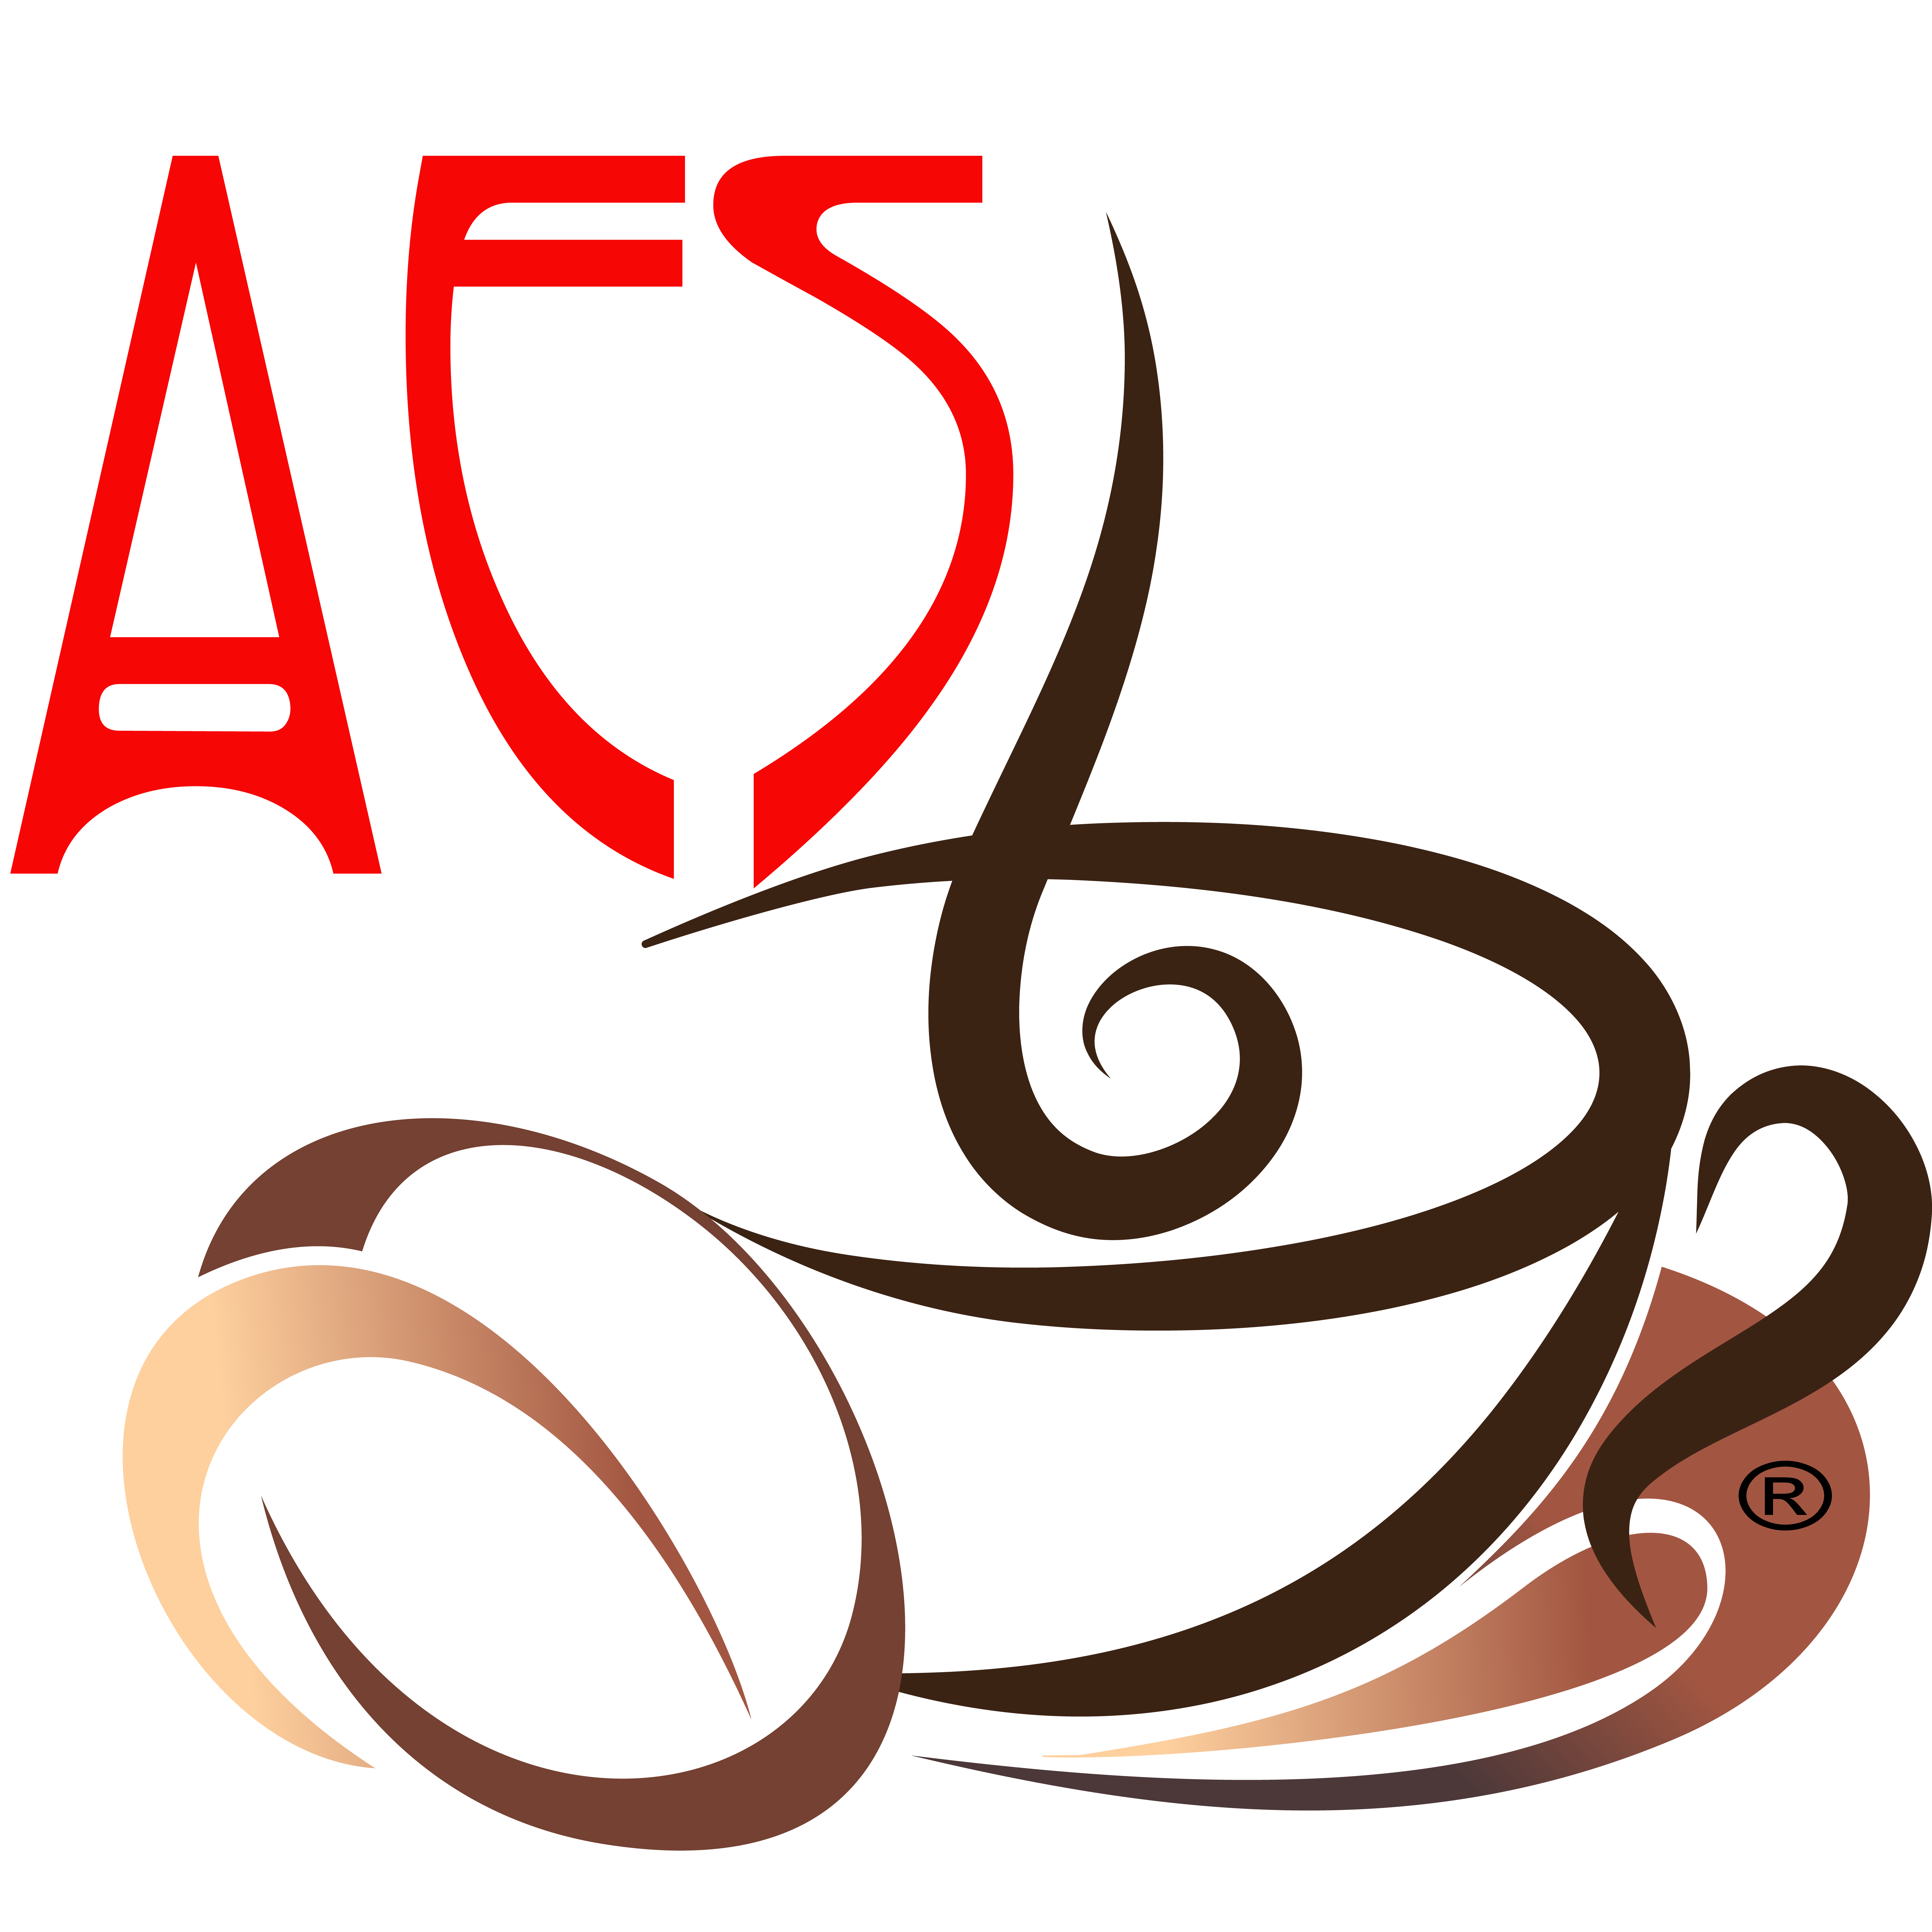 All Espresso Service - Pompano Beach, FL 33069 - (754)205-5076 | ShowMeLocal.com